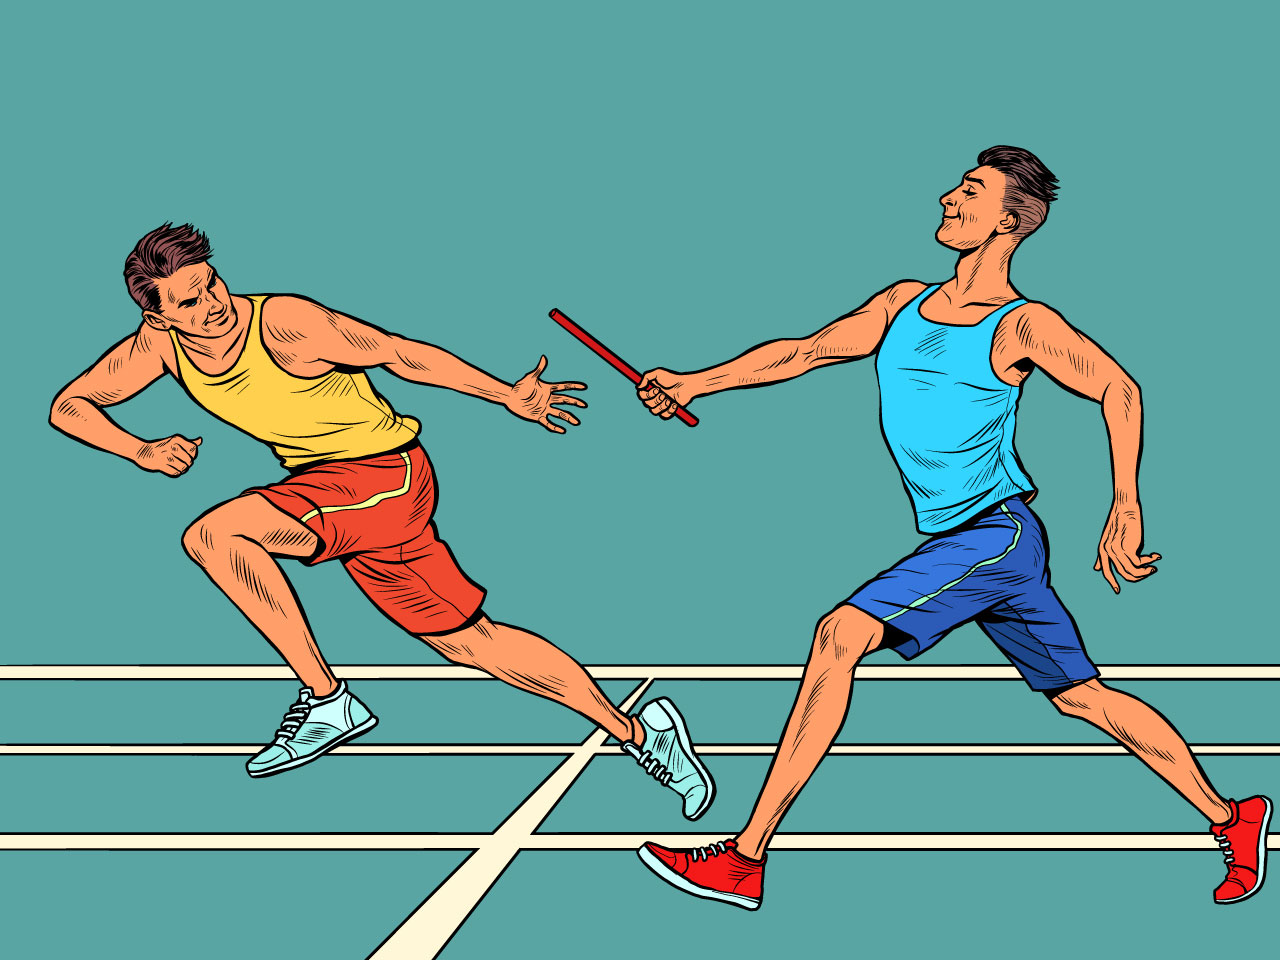 Sports relay passing baton men athletes race cartoon image